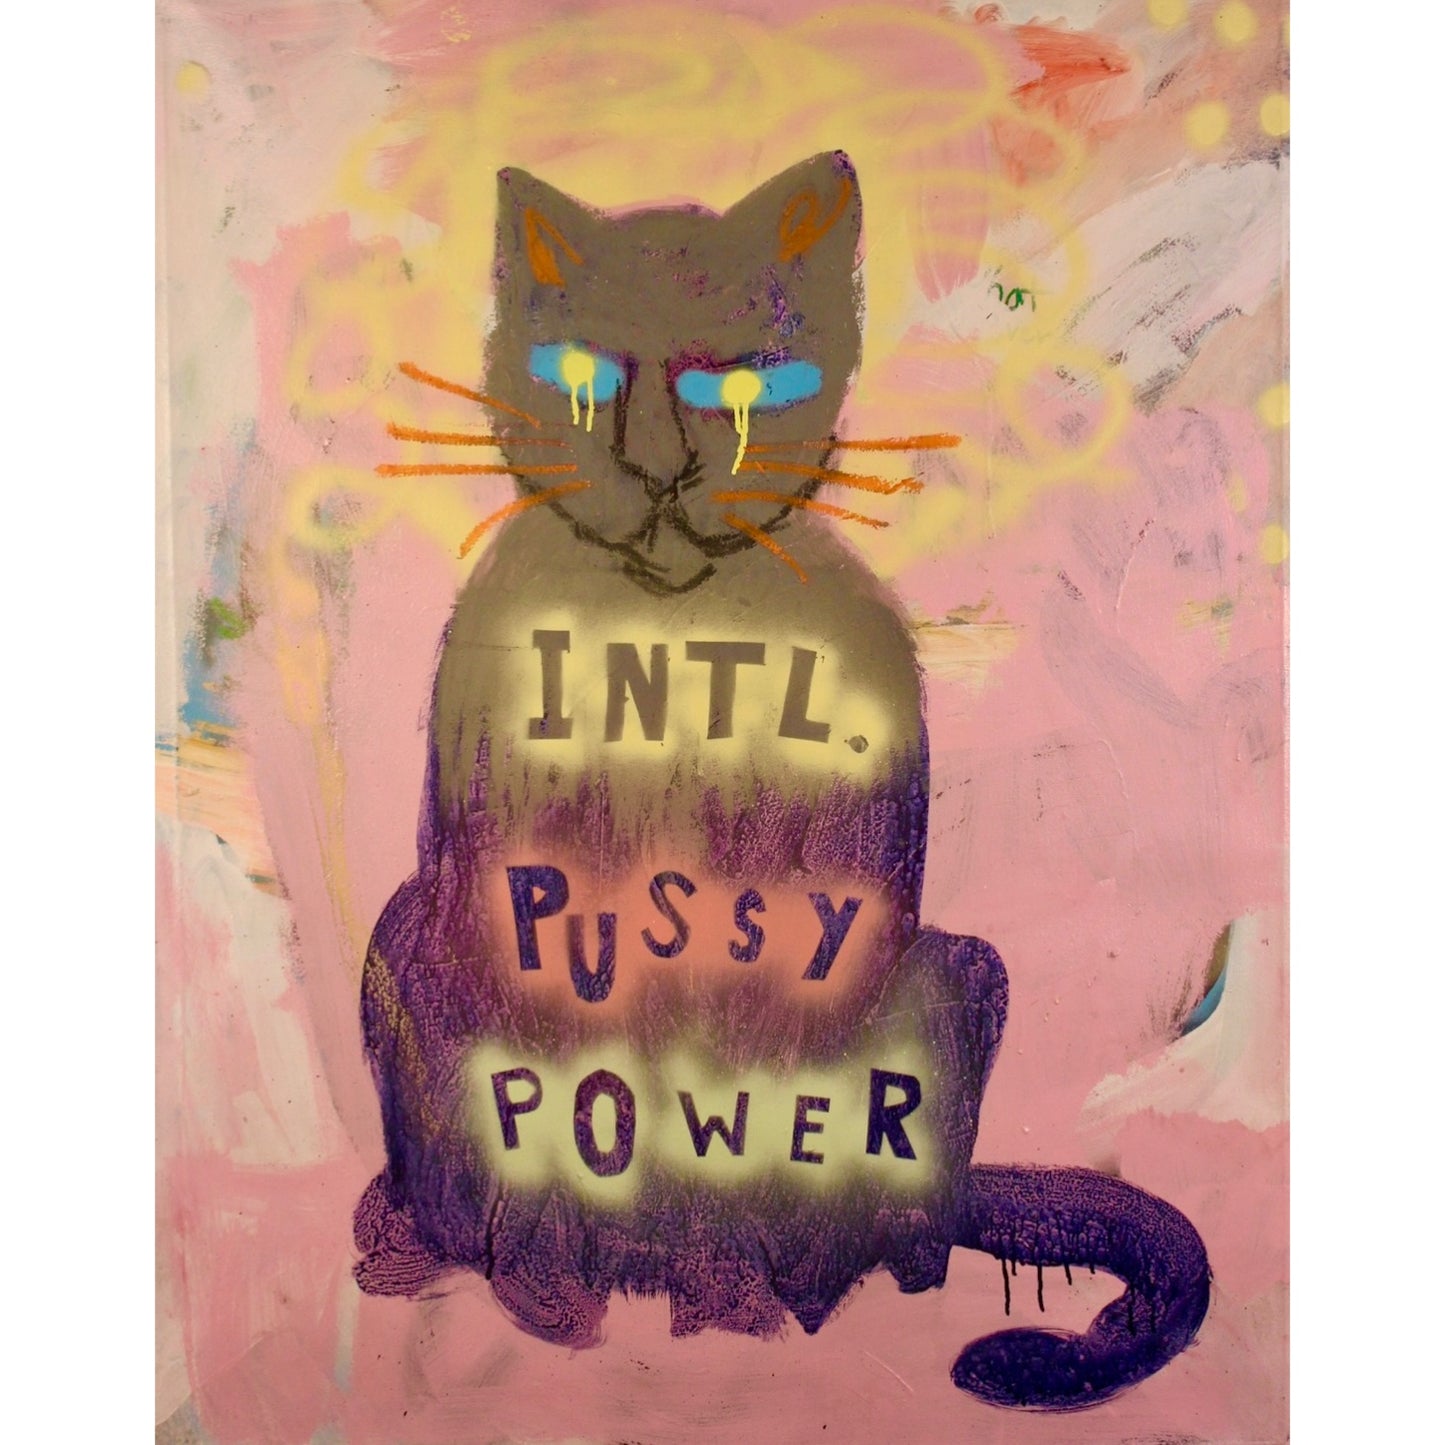 Intl Pussy Power